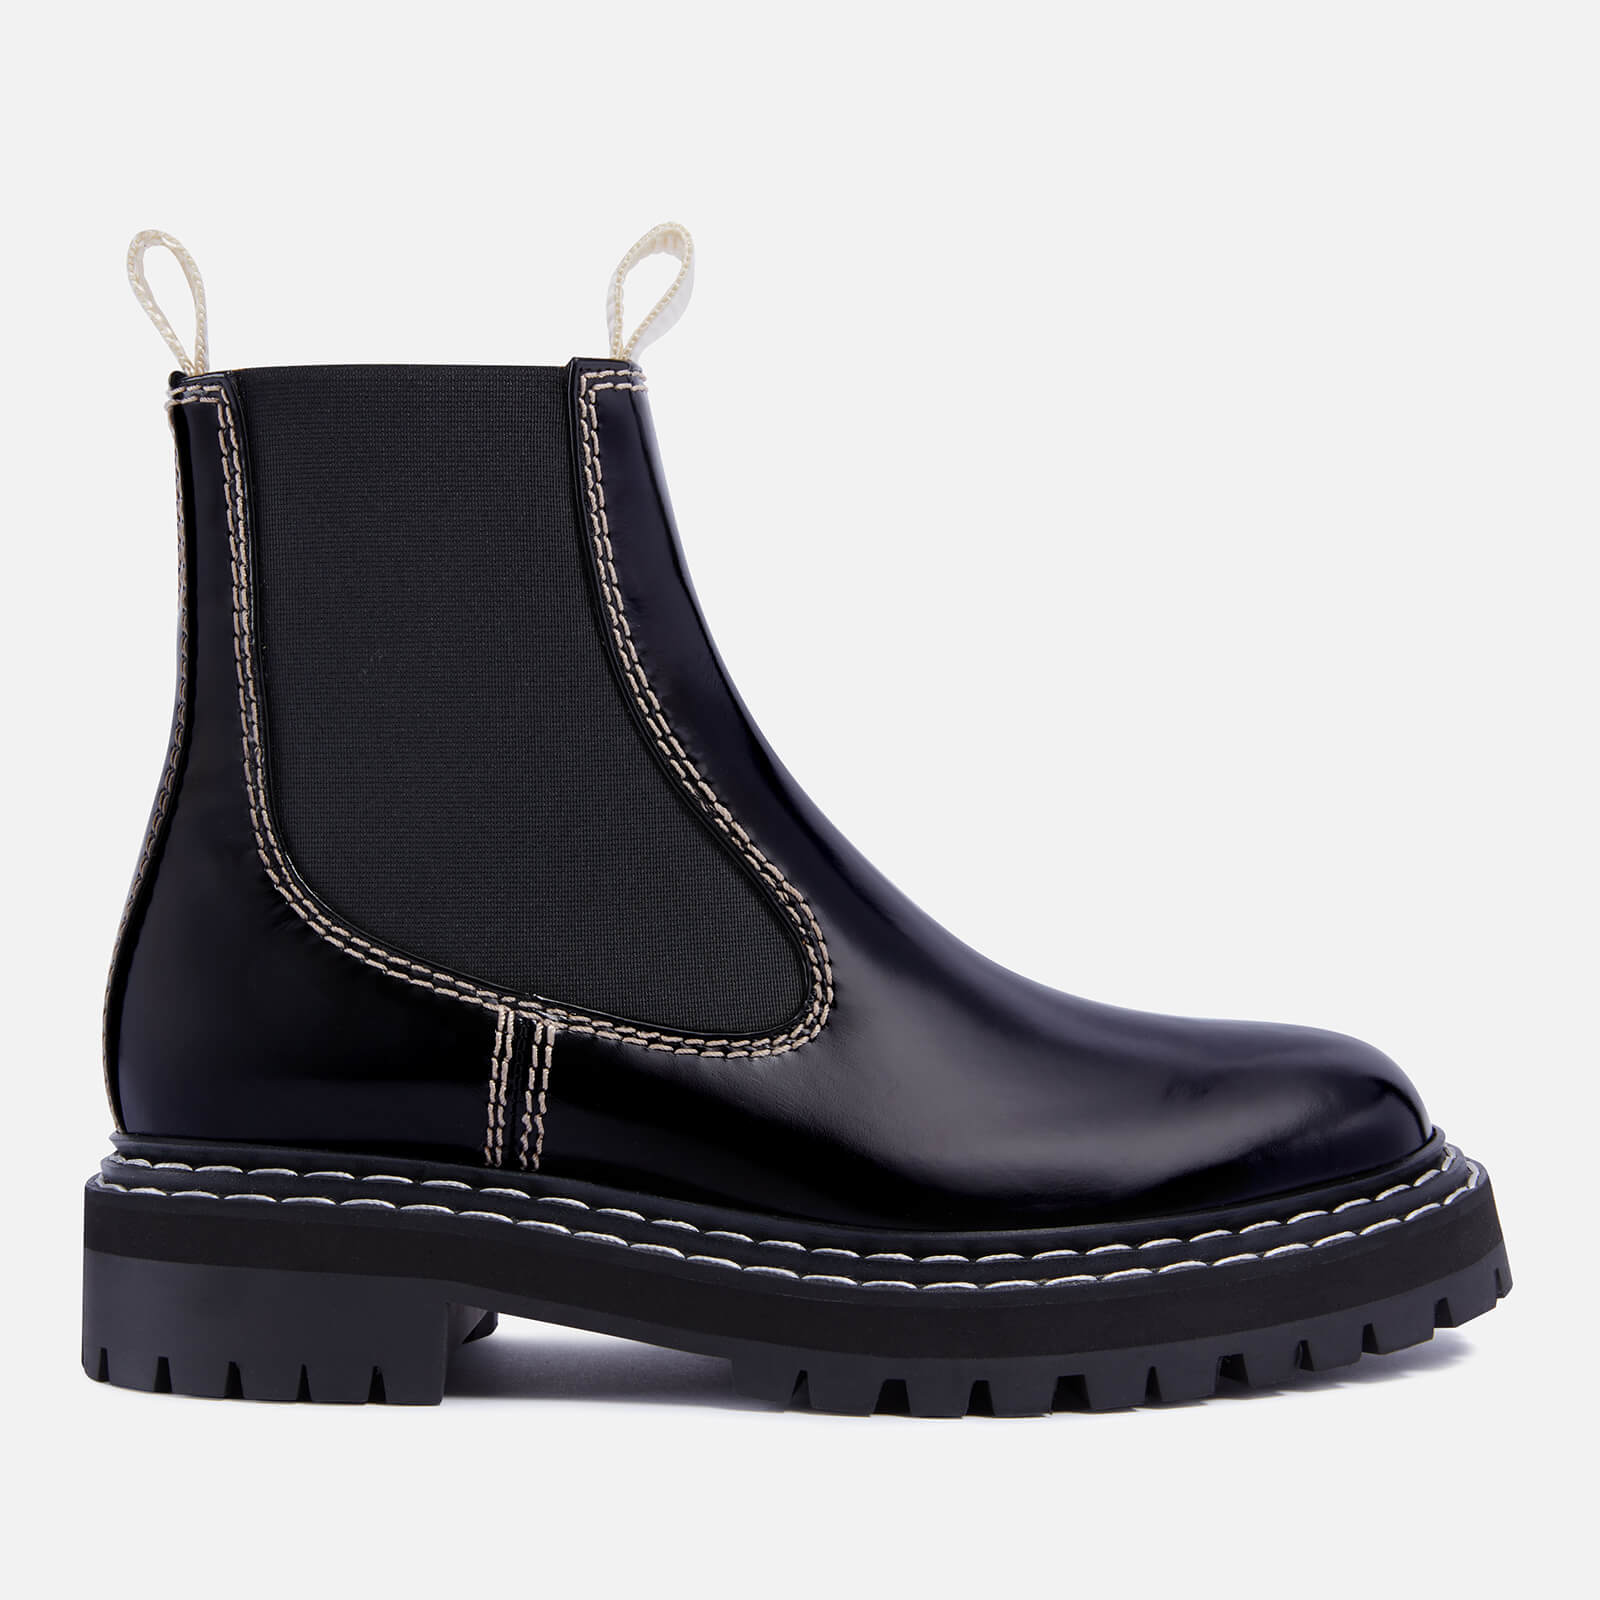 Proenza Schouler Leather Chelsea Boots - UK 3